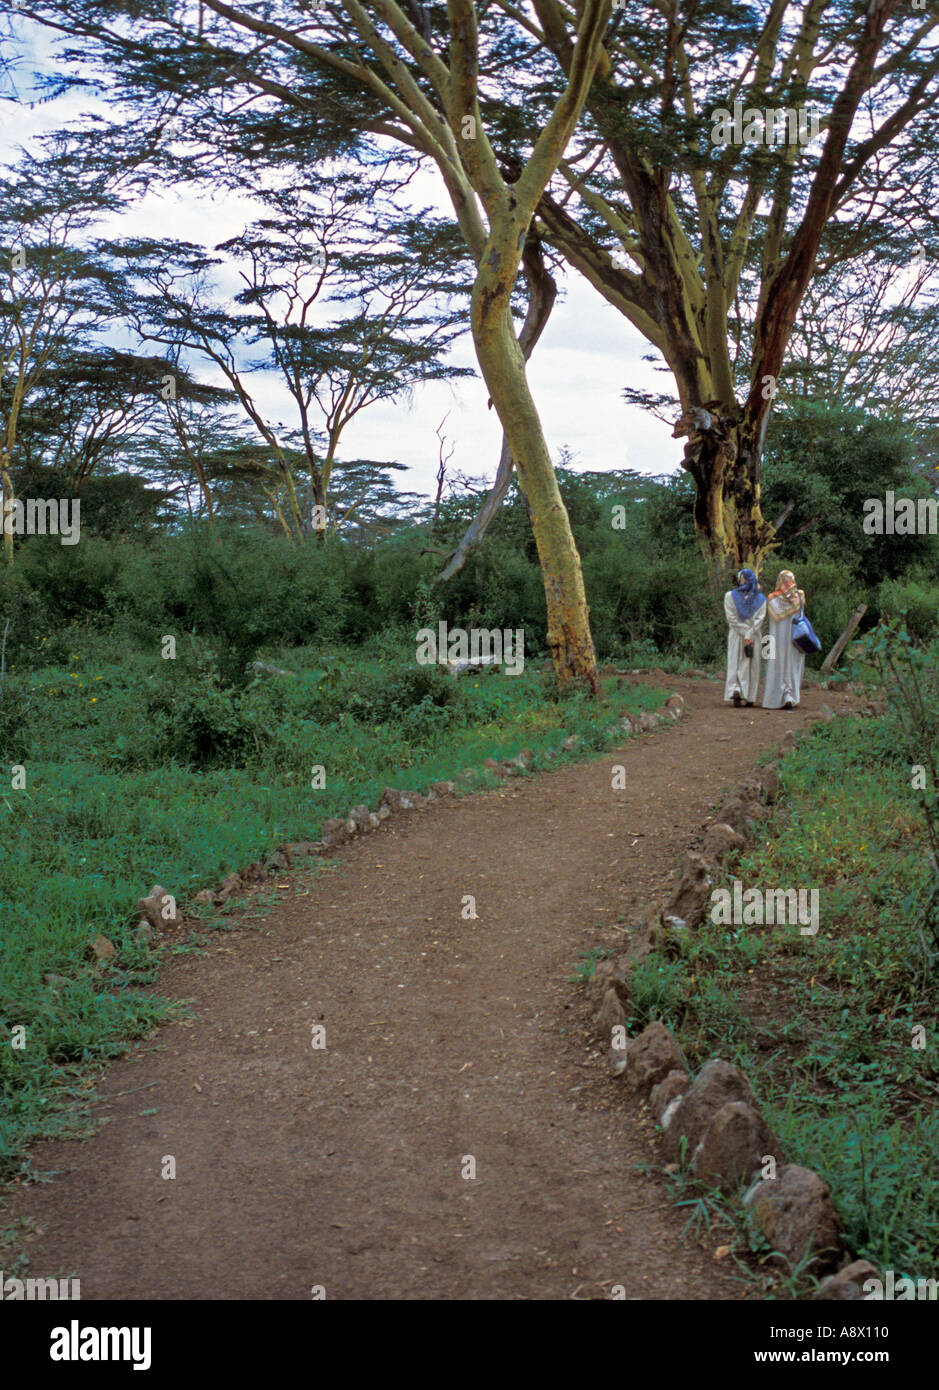 KENYA Nairobi National Park Muslim women walk on path in Nairobi National Park Kenya Africa Stock Photo